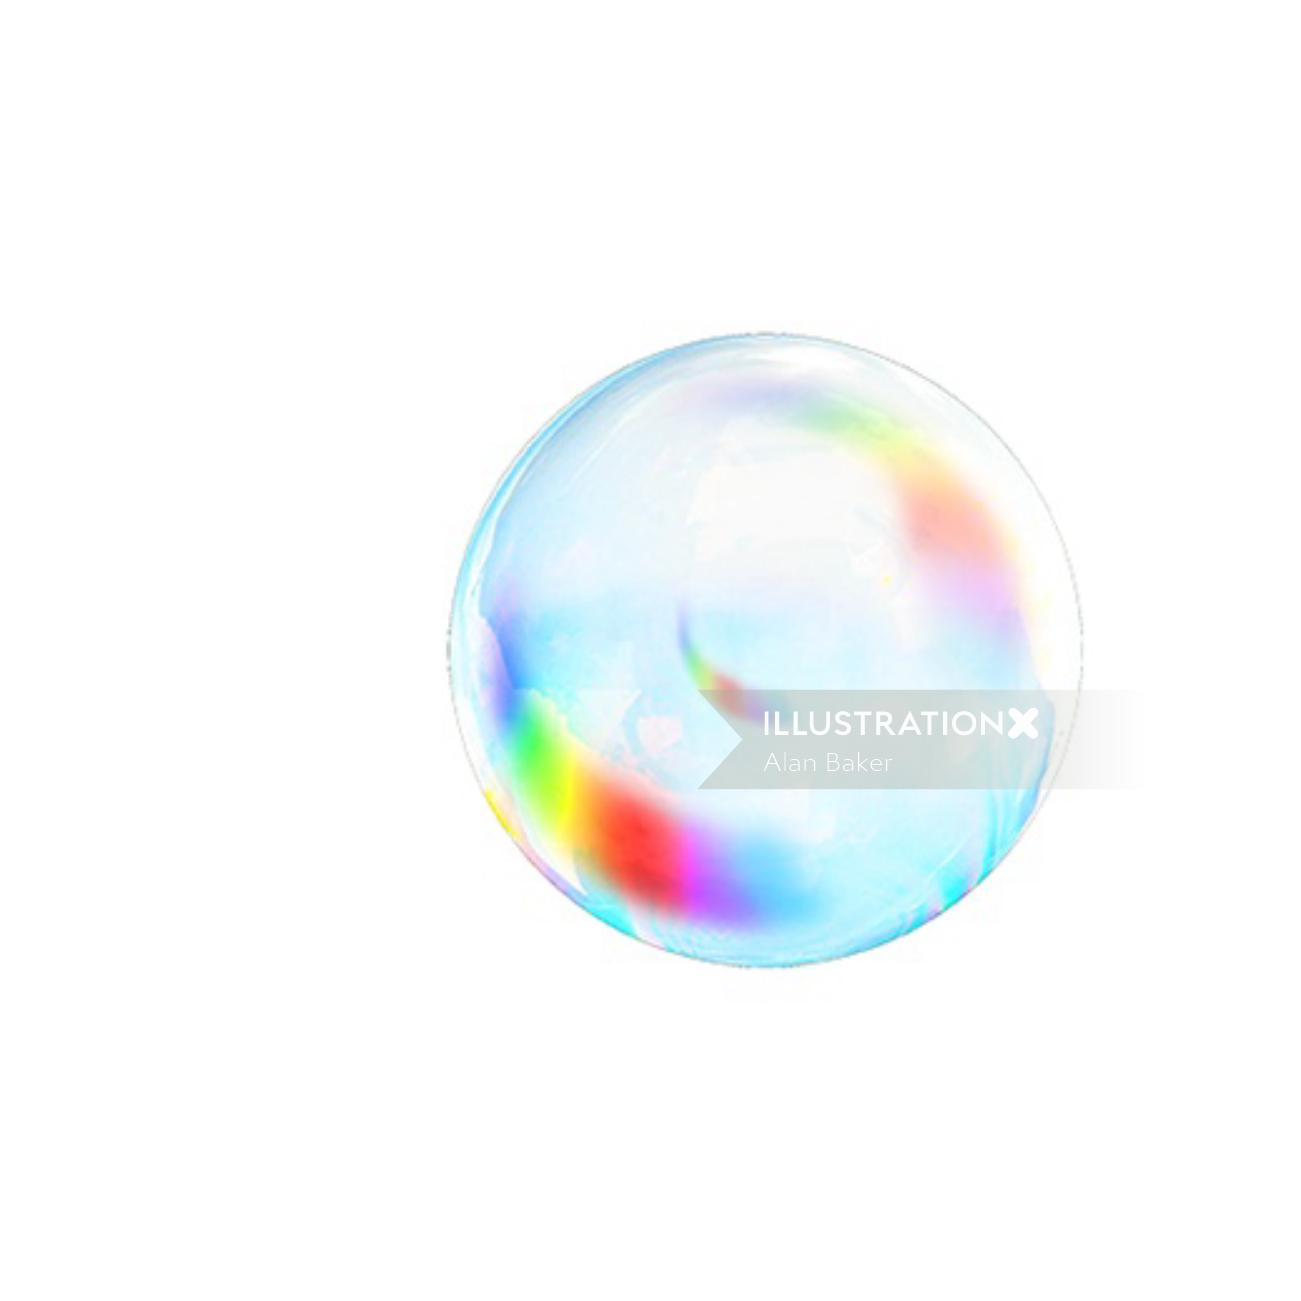 Animation de bulle flottante